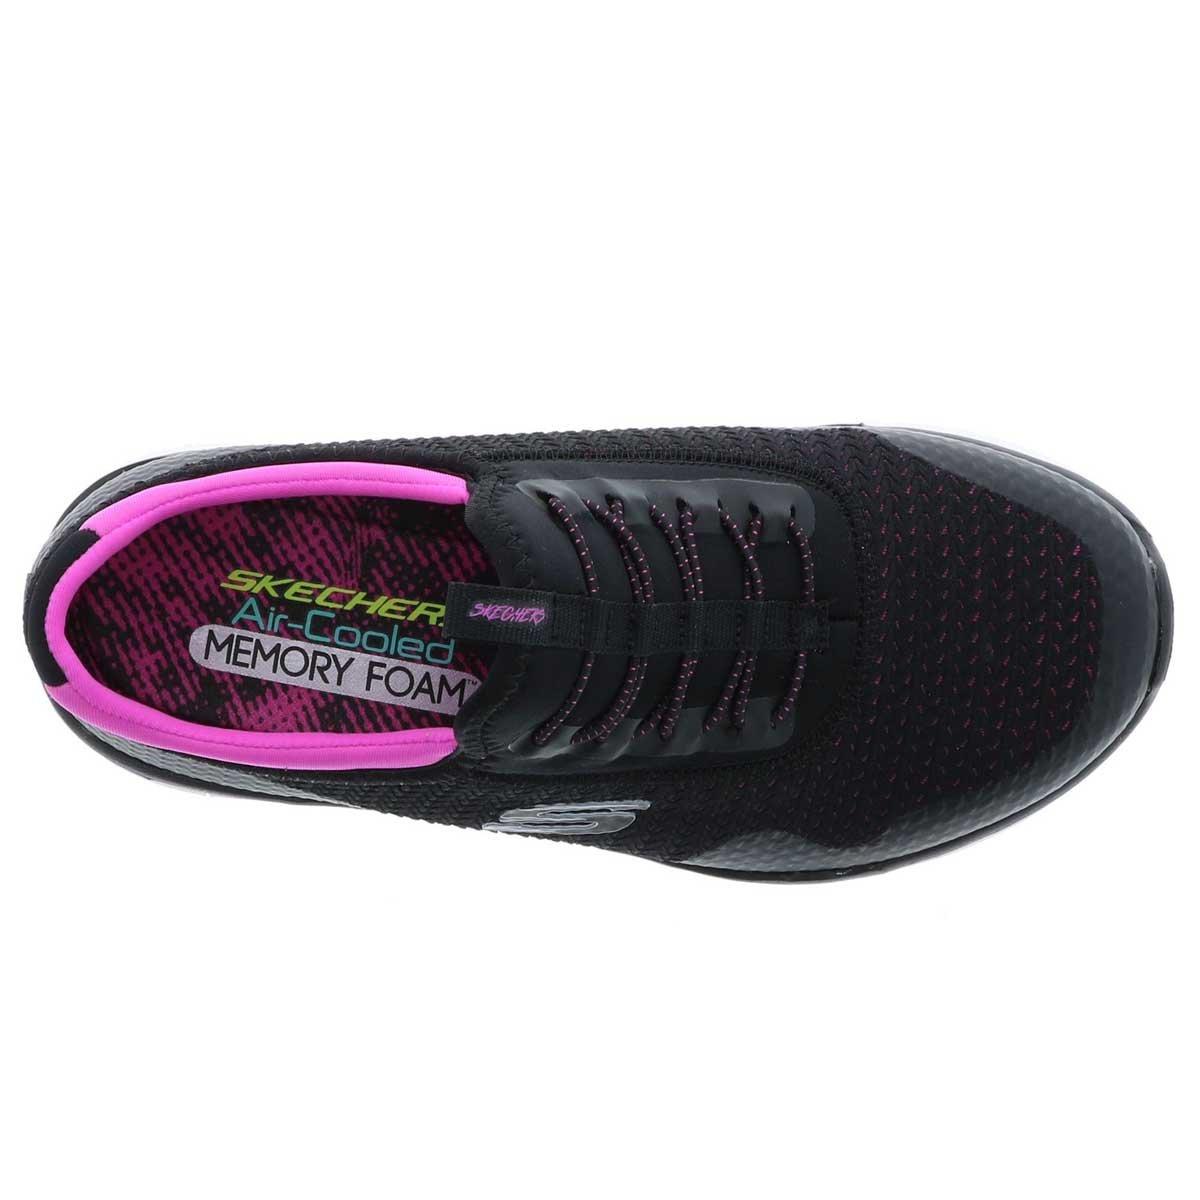 Buy Skechers Air Cooled Memory Foam Womens Shoes Online